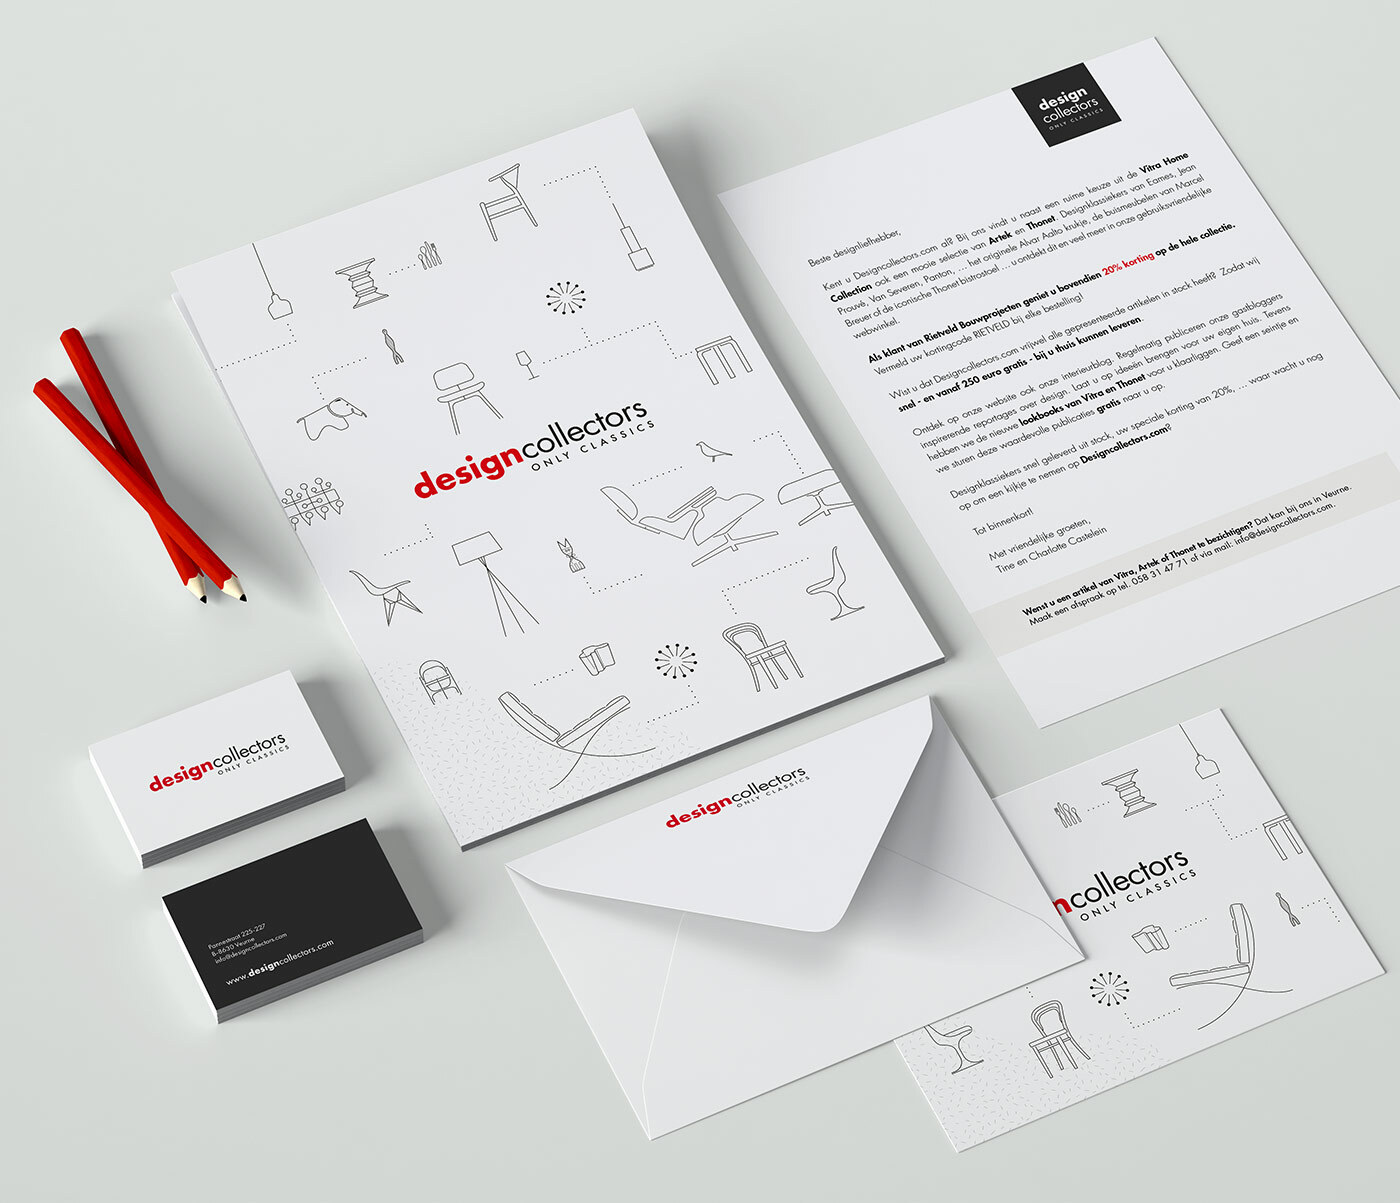 Designcollectors branding material & stationery design